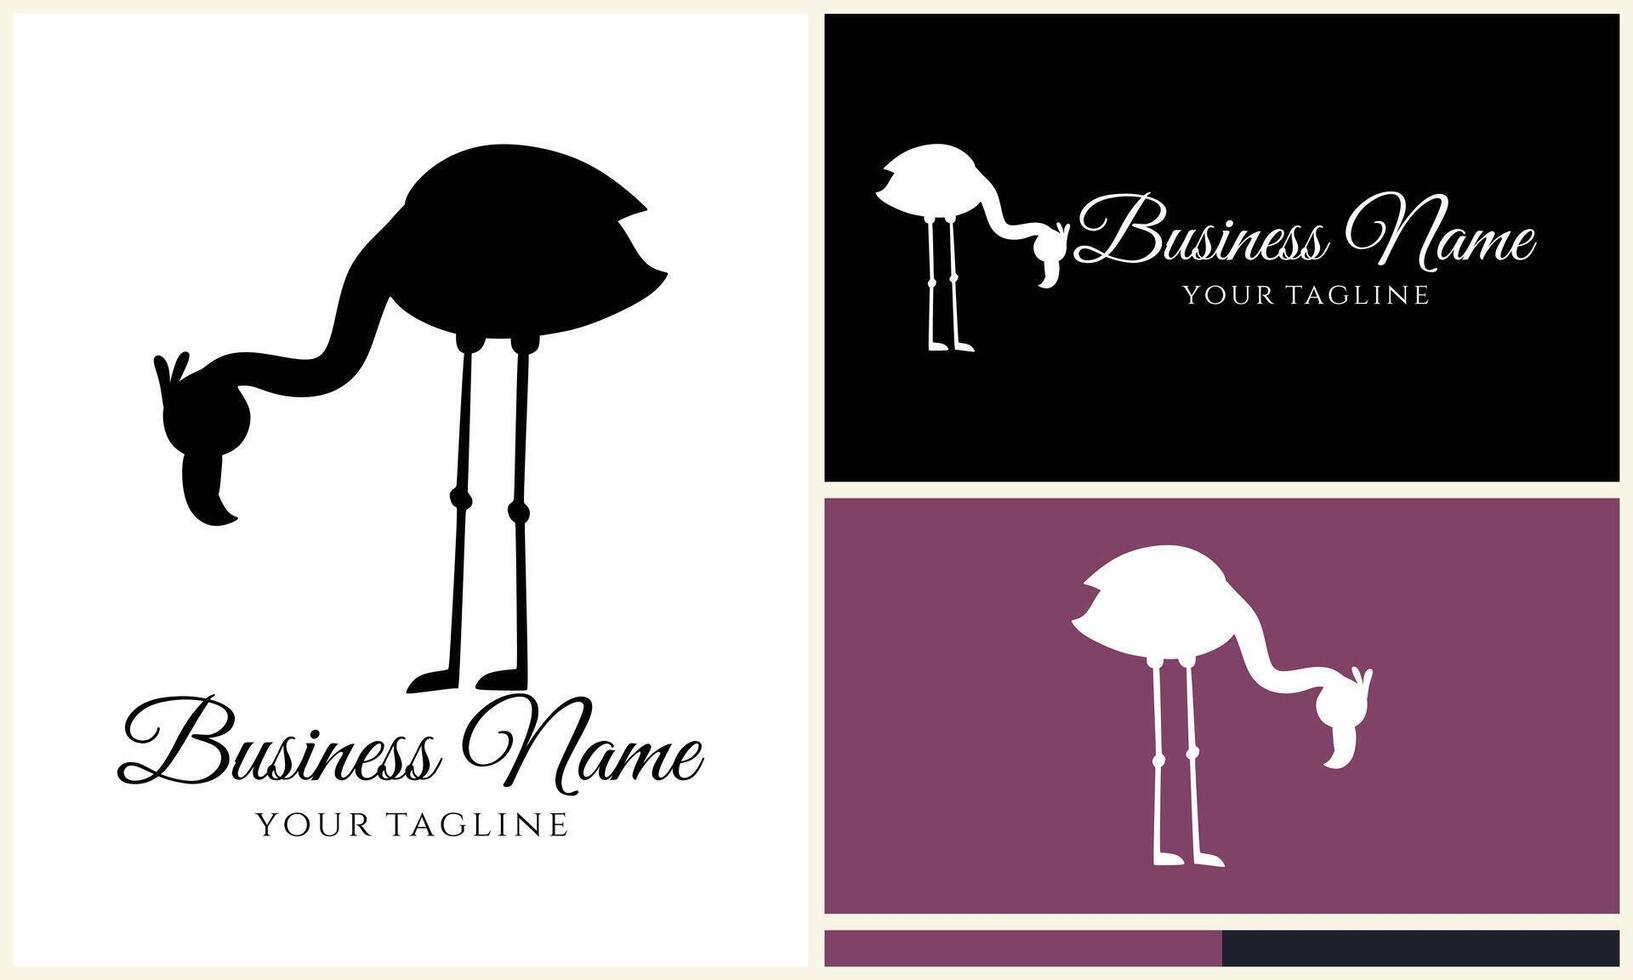 silhouette stork flamingo logo template vector